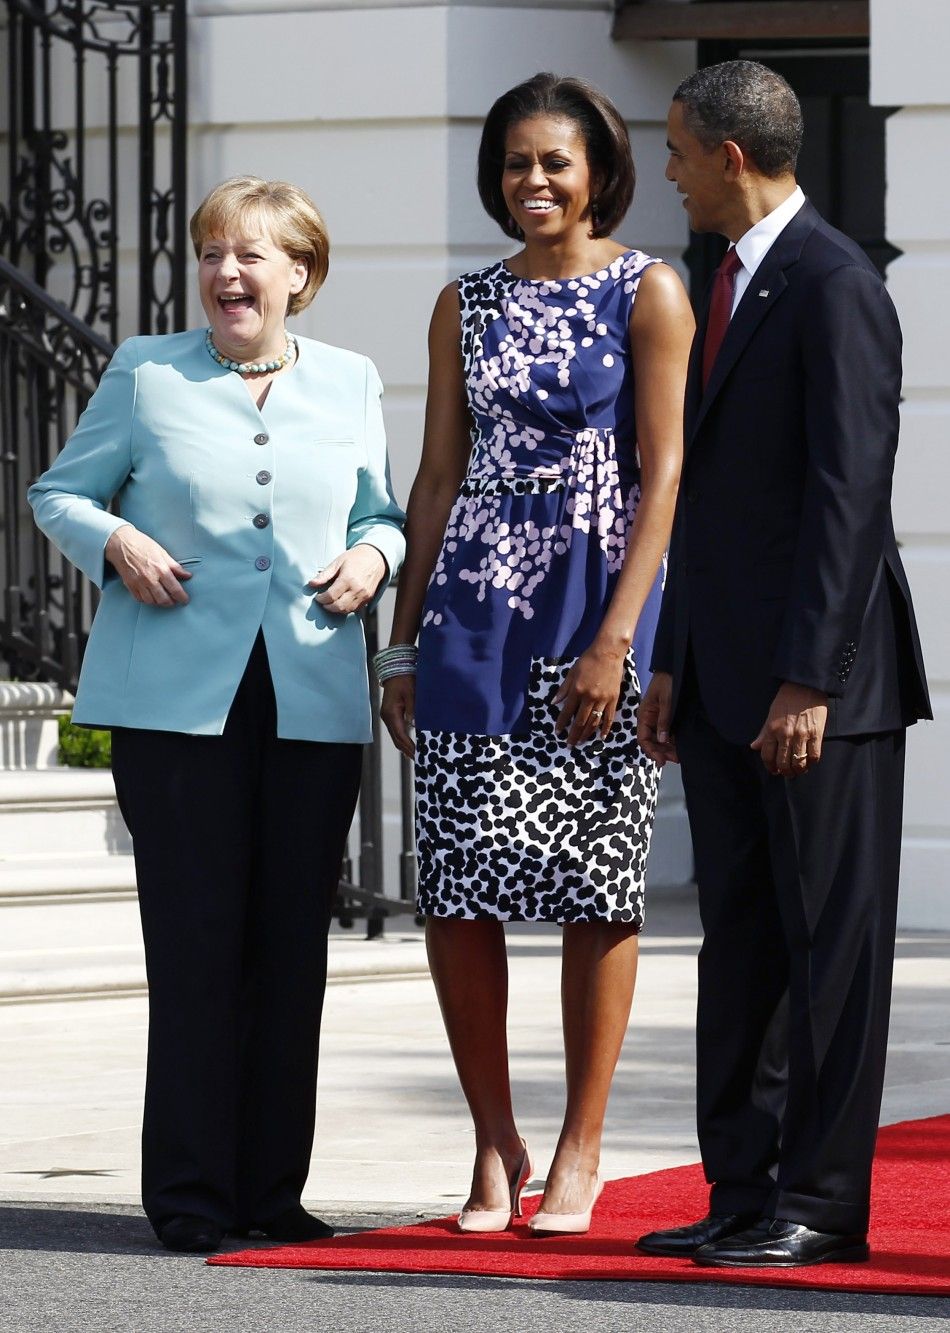 Fashion rules ladies as Merkel visits White House